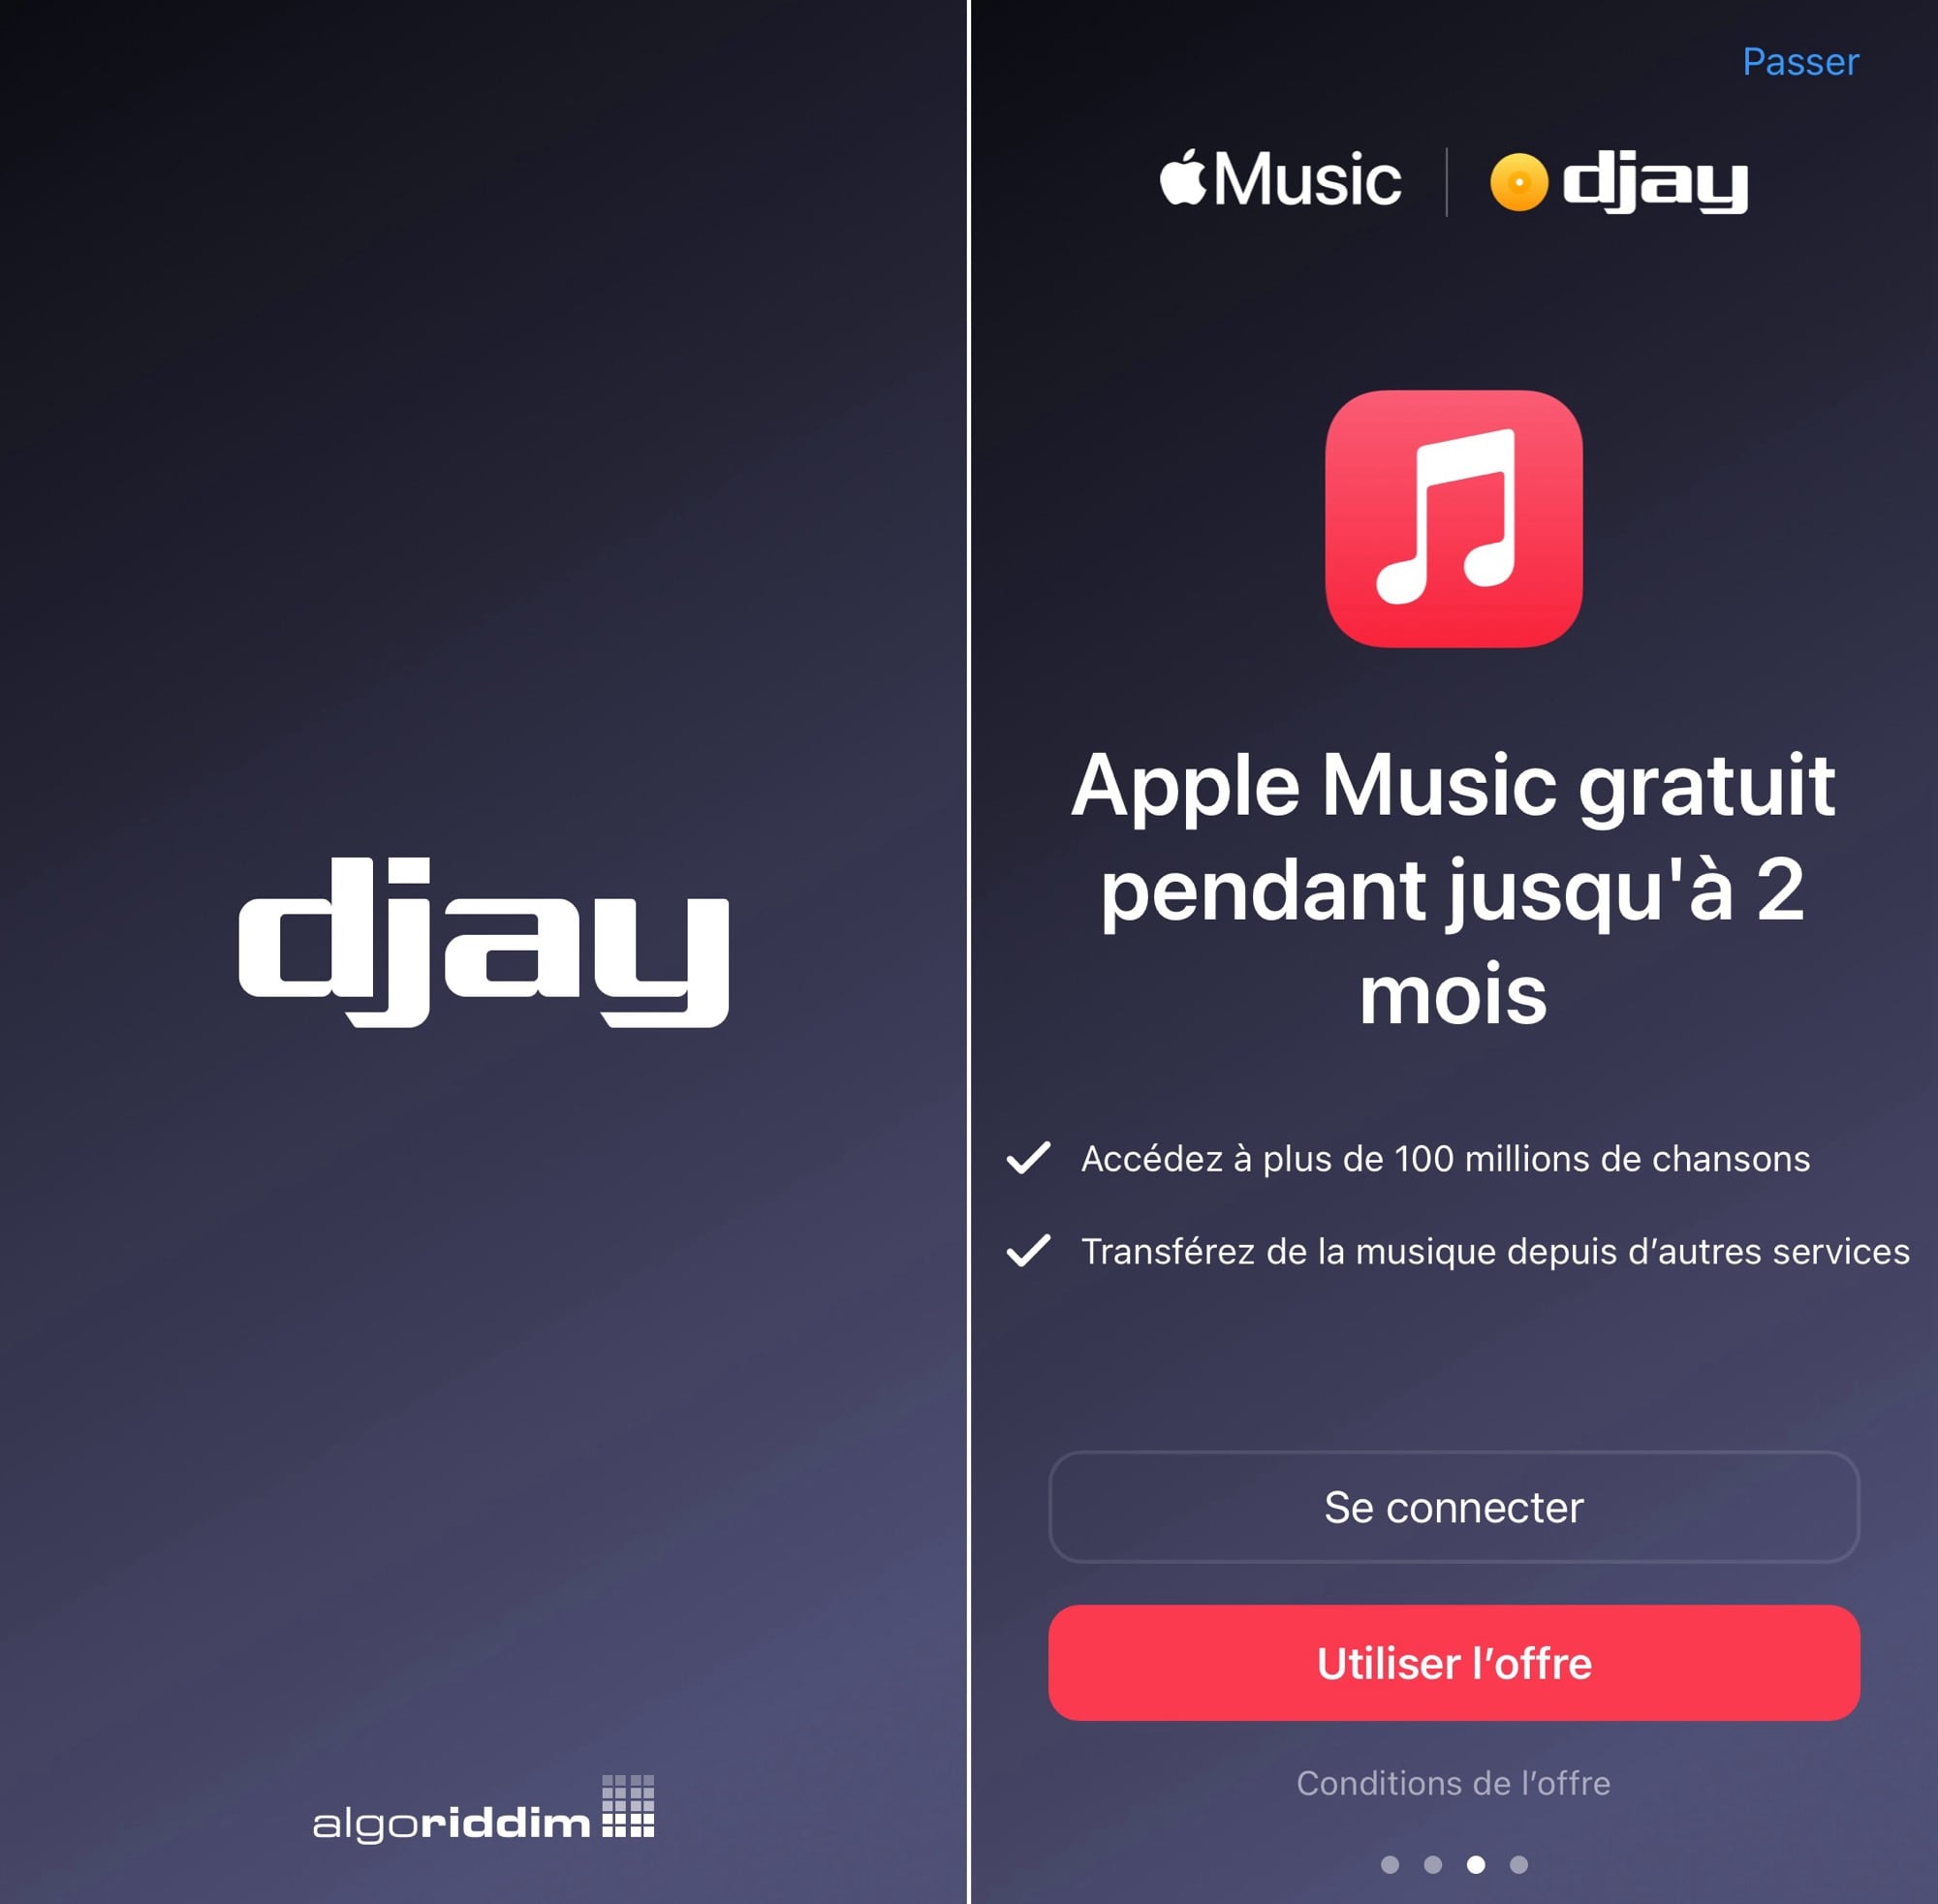 Apple music offre djay 2 mois gratuits